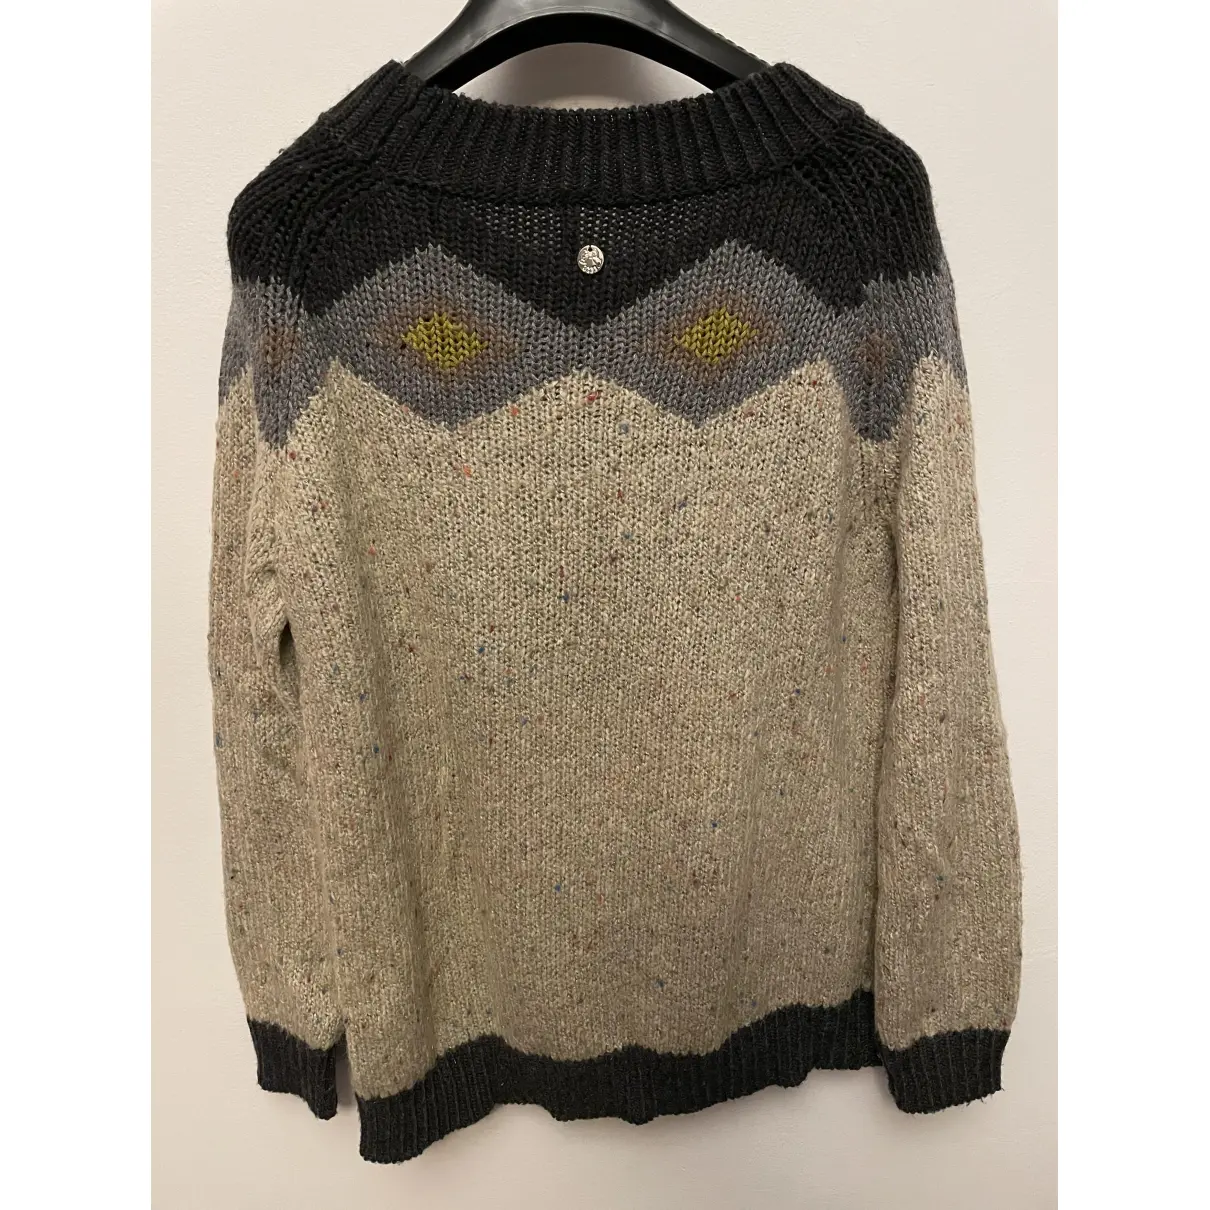 Buy Twinset Wool jumper online